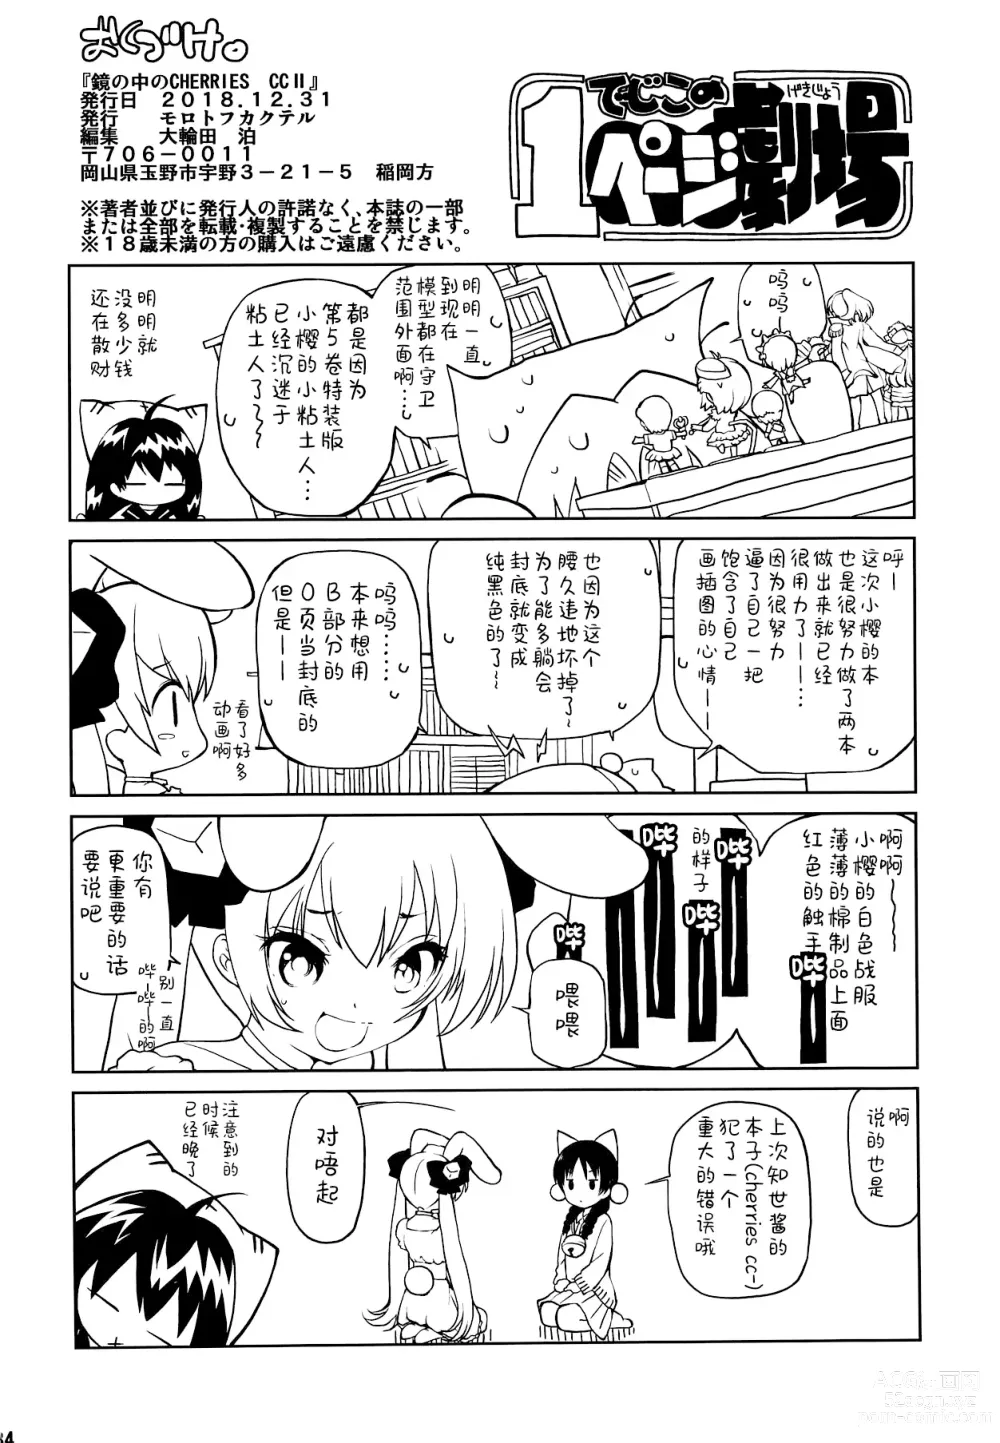 Page 34 of doujinshi Kagami no Naka no CHERRIES CC II